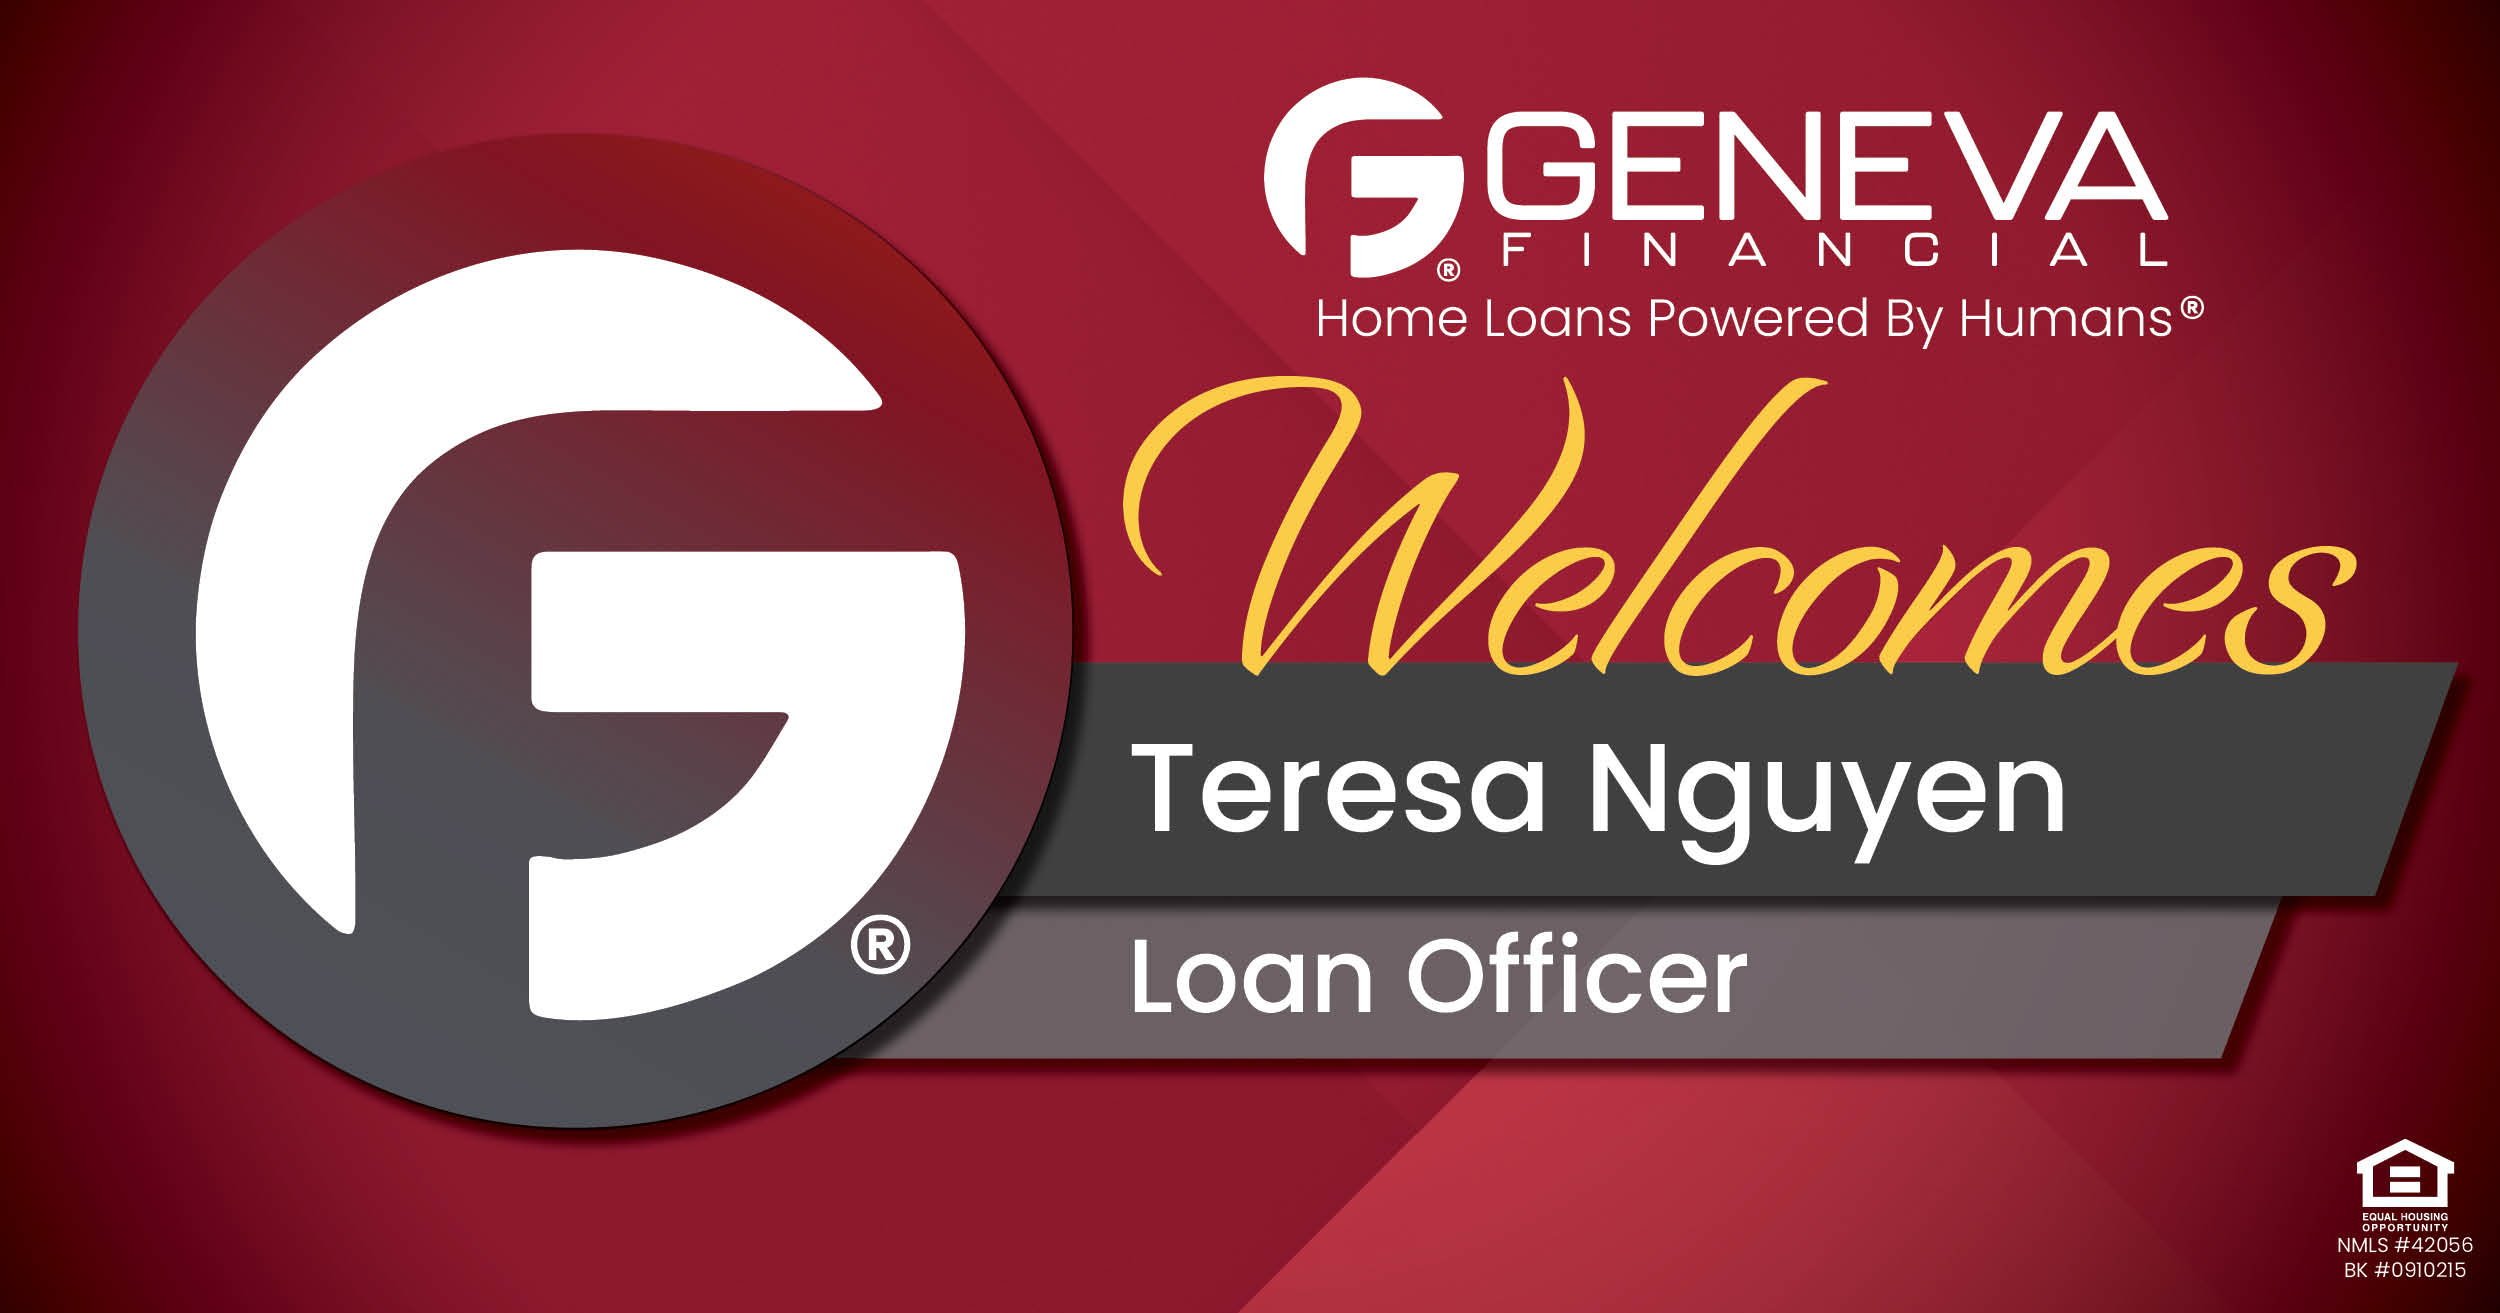 Geneva Financial Welcomes New Loan Officer Teresa Nguyen to Lake Oswego, Oregon – Home Loans Powered by Humans®.